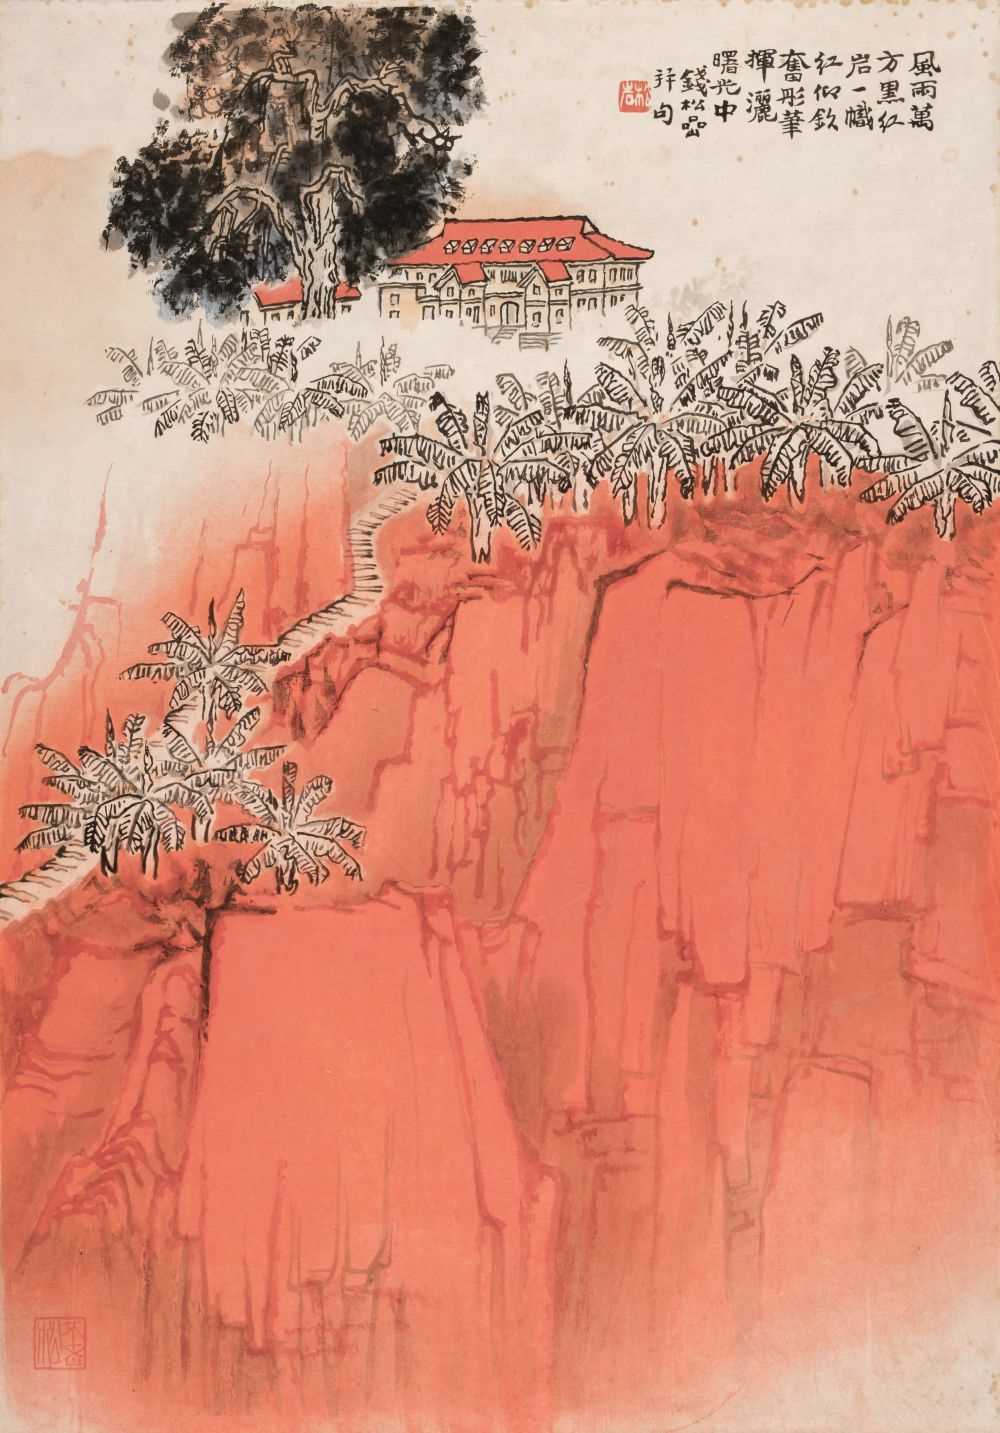 Lot 257 - Qian Songyan 錢松岩 (1899-1985). Red Cliff, circa 1975